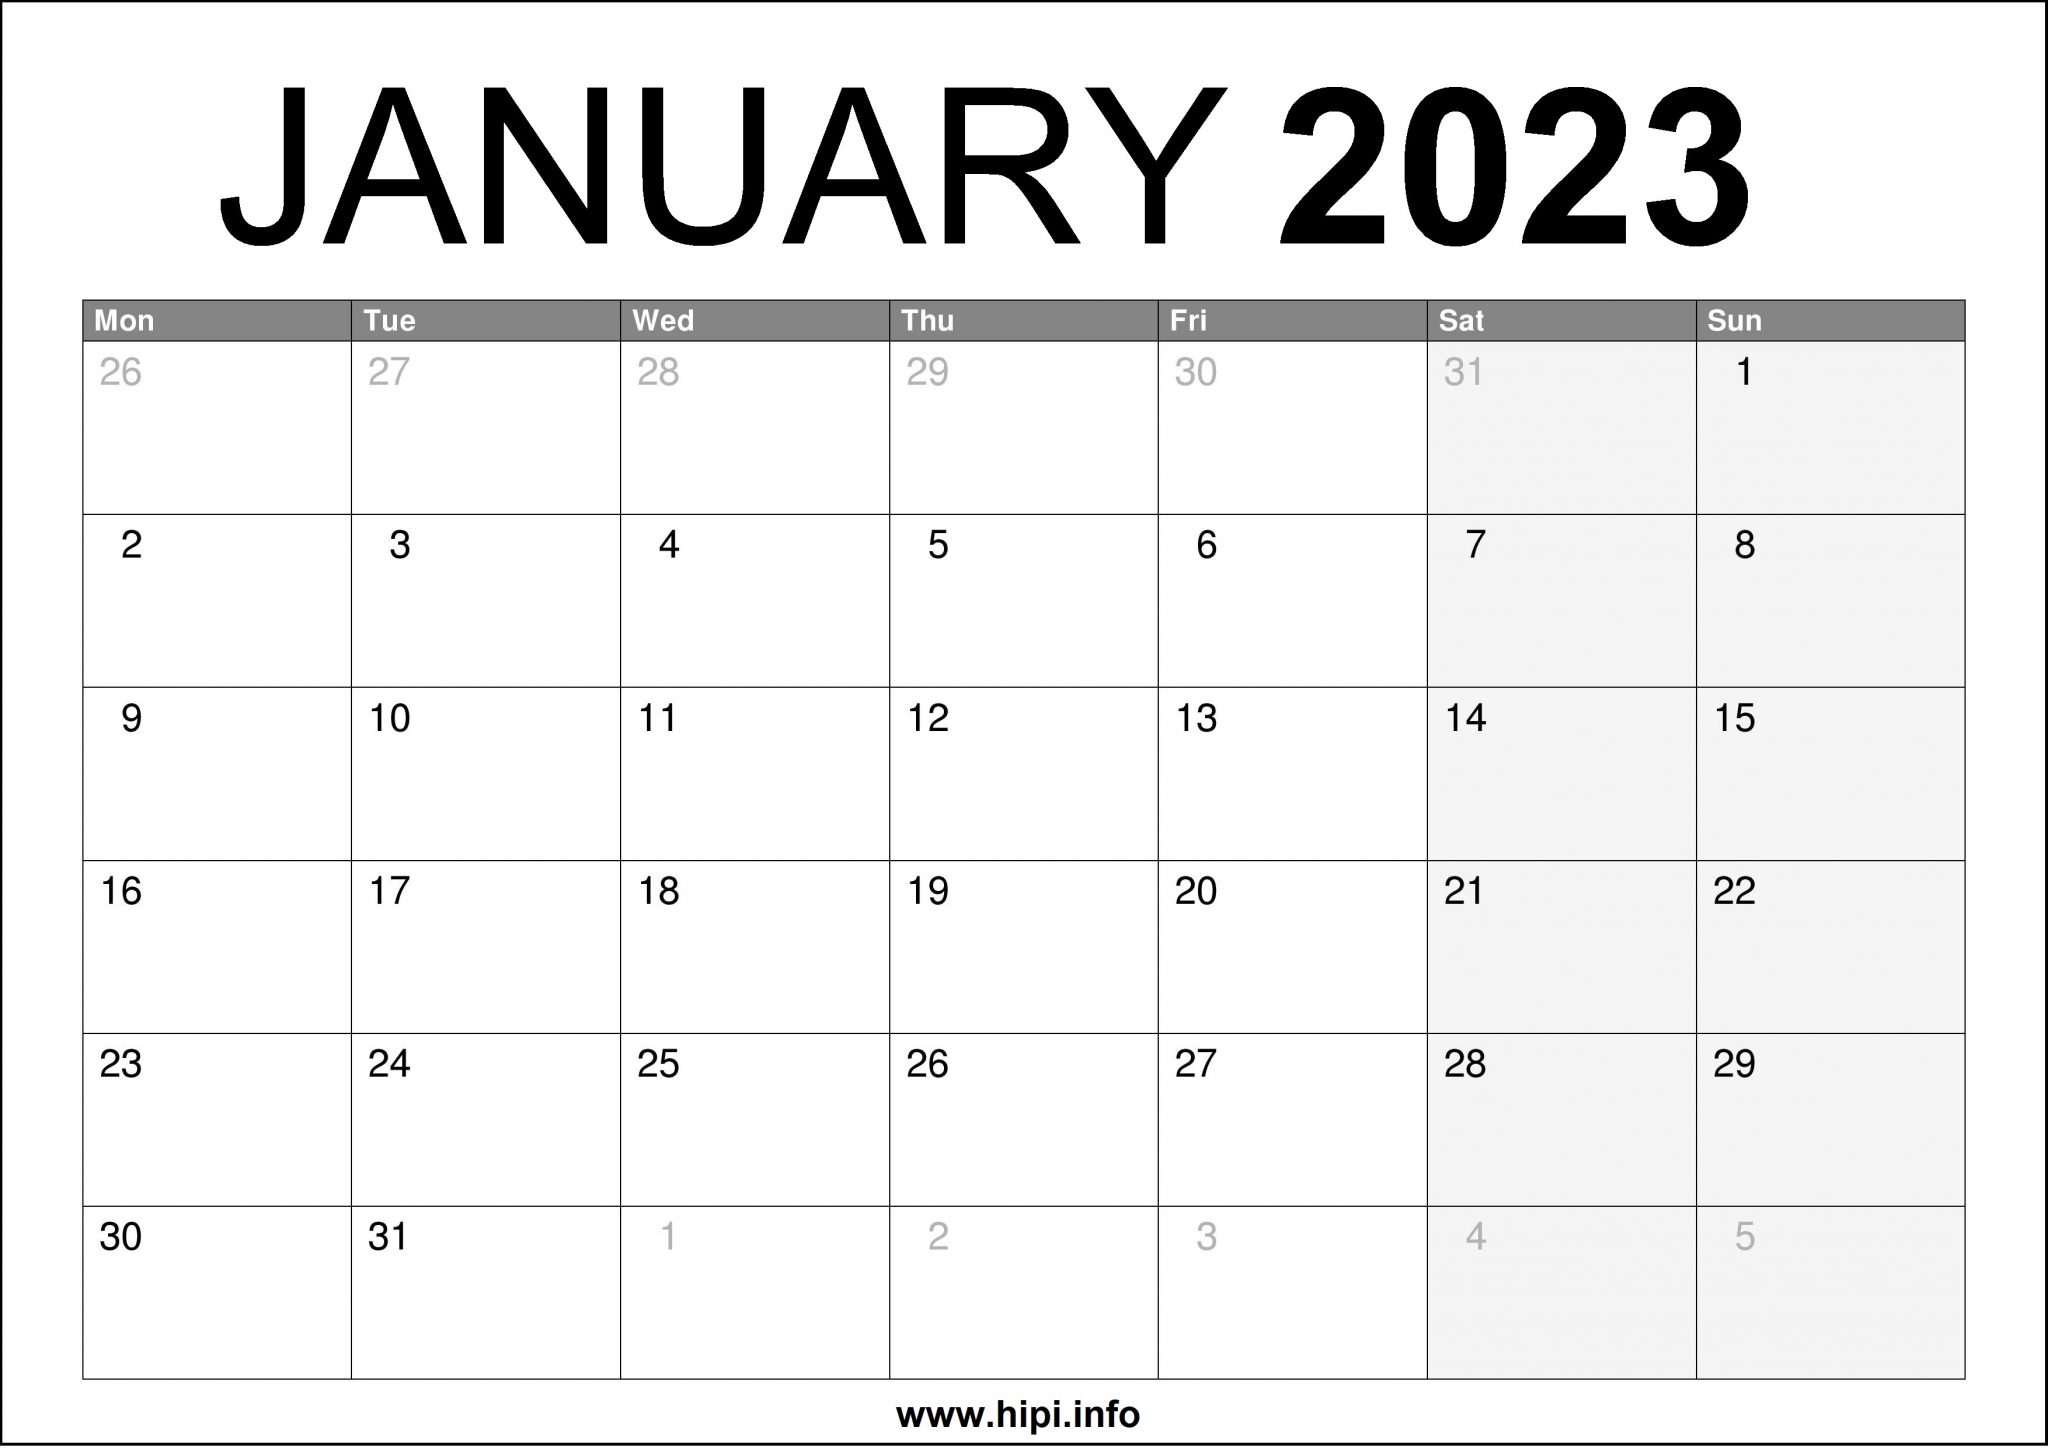 january-2023-uk-calendar-printable-free-hipi-info